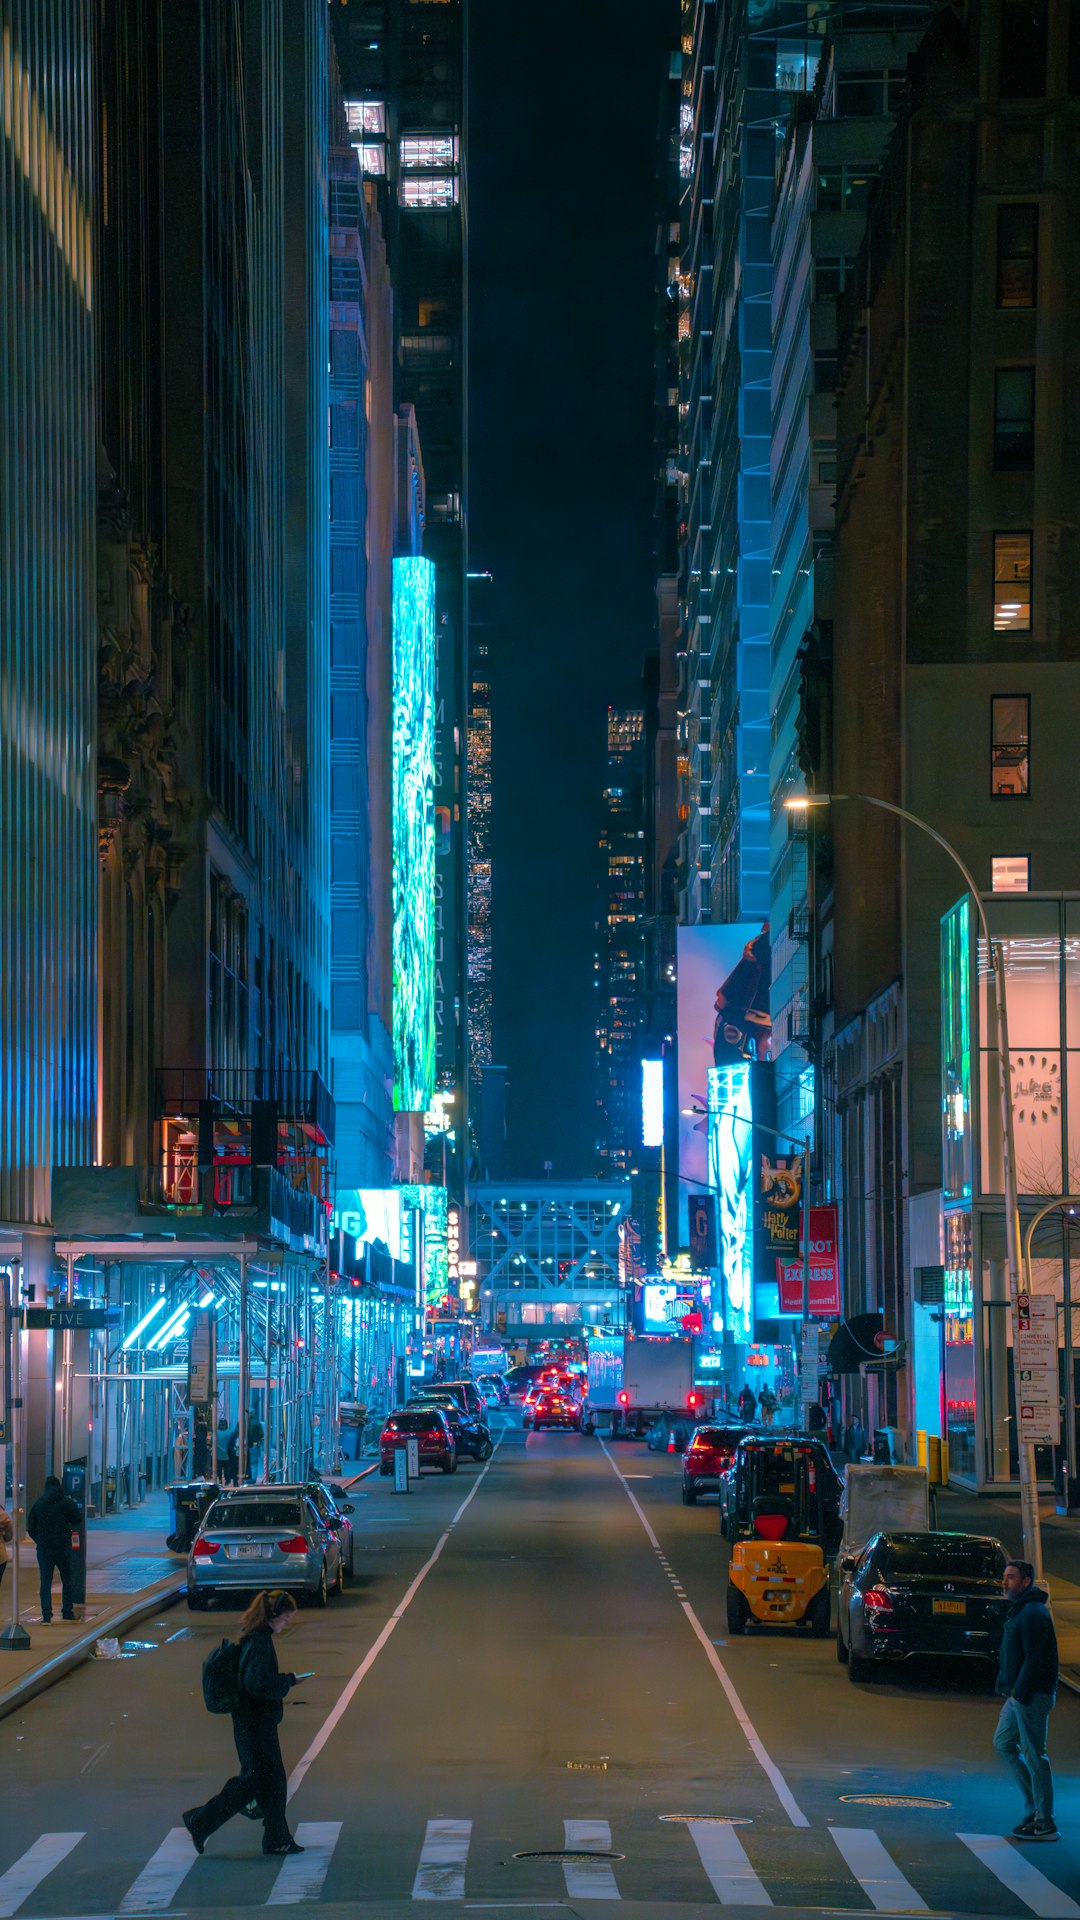 Cyberpunk creation of a street in New York City.